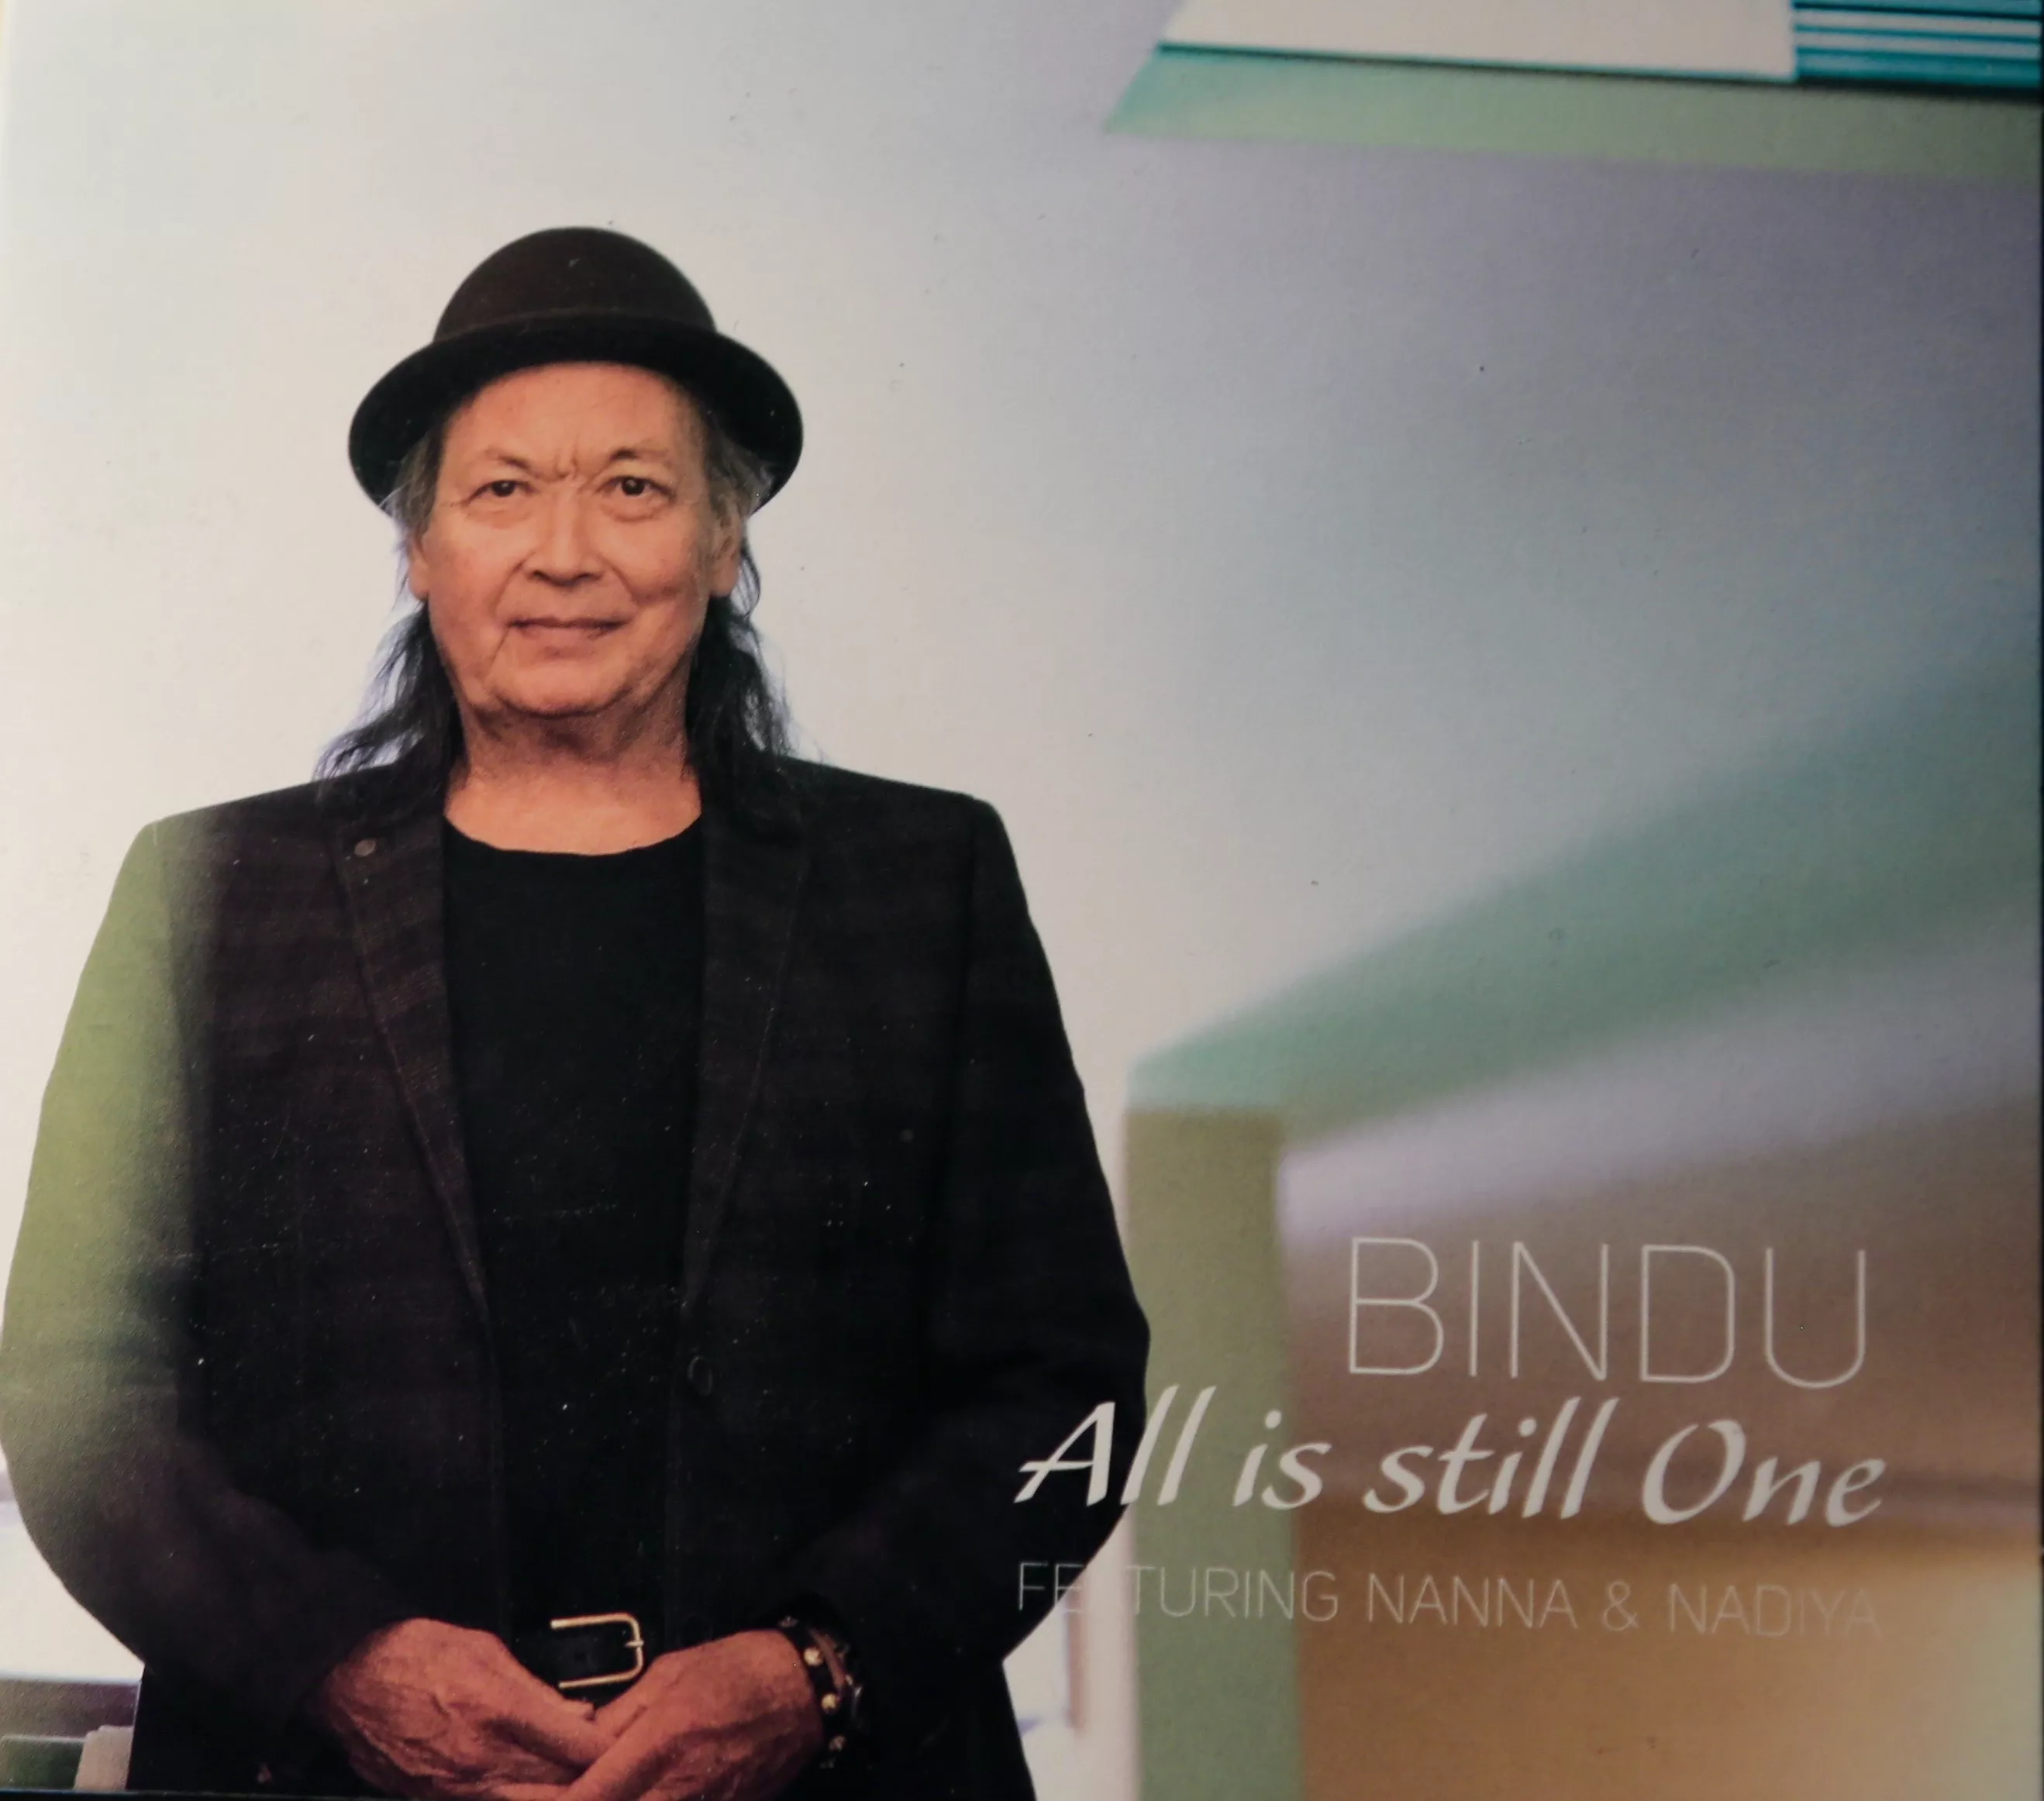 All is still One - Bindu